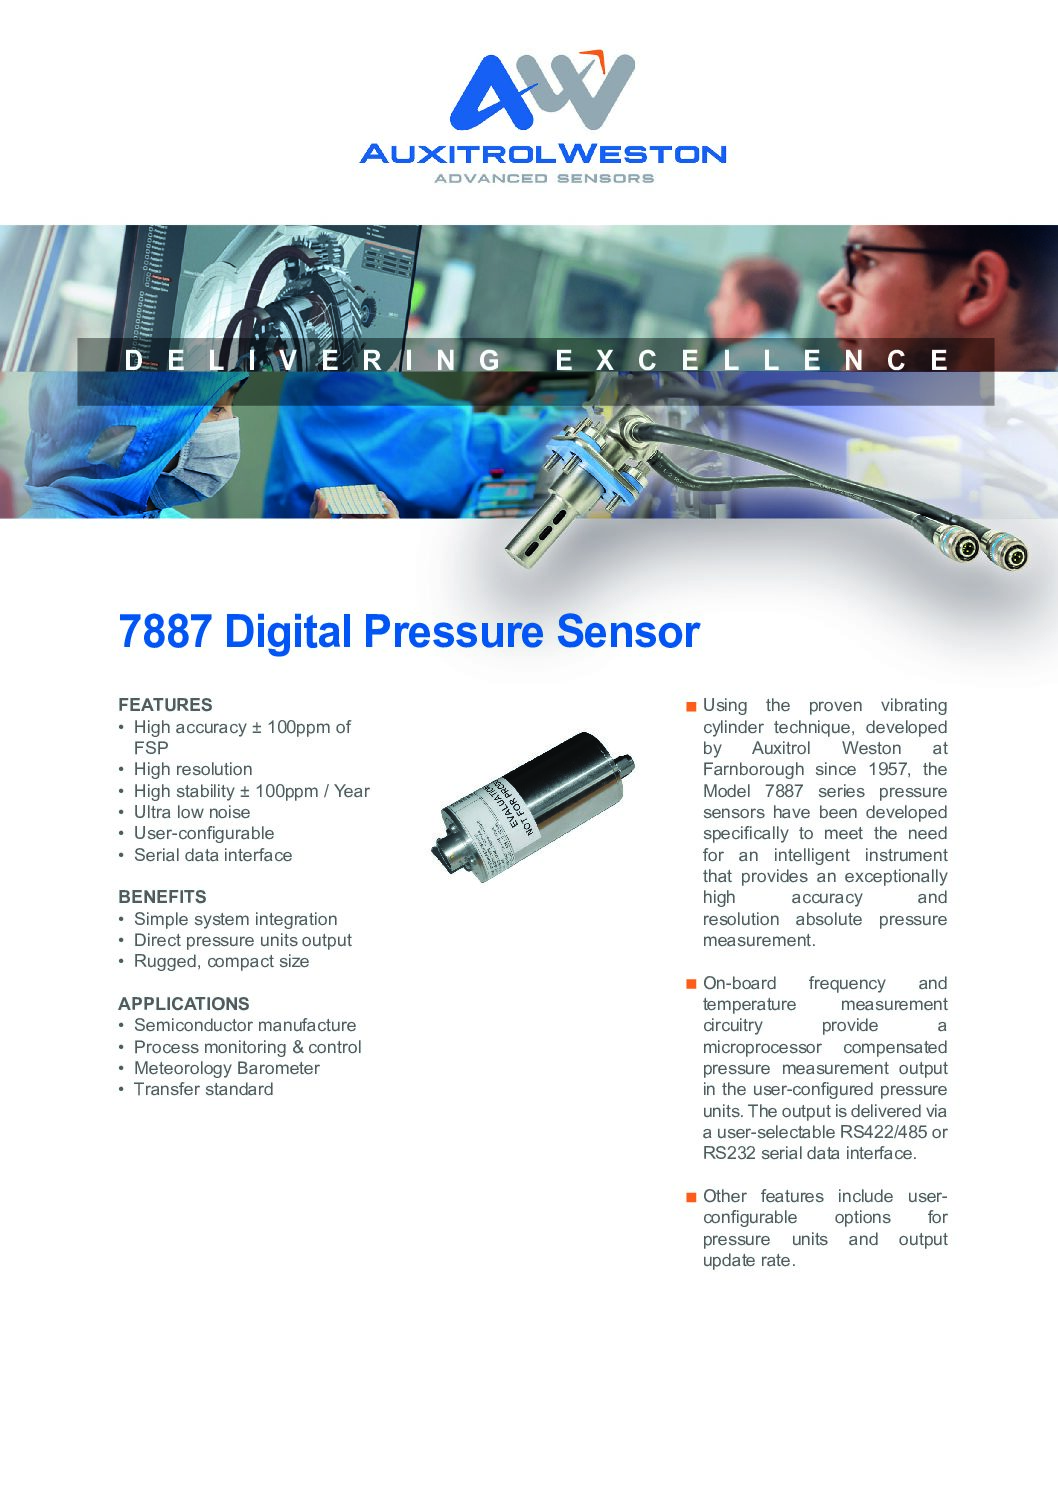 Water-cooled cylinder pressure sensors